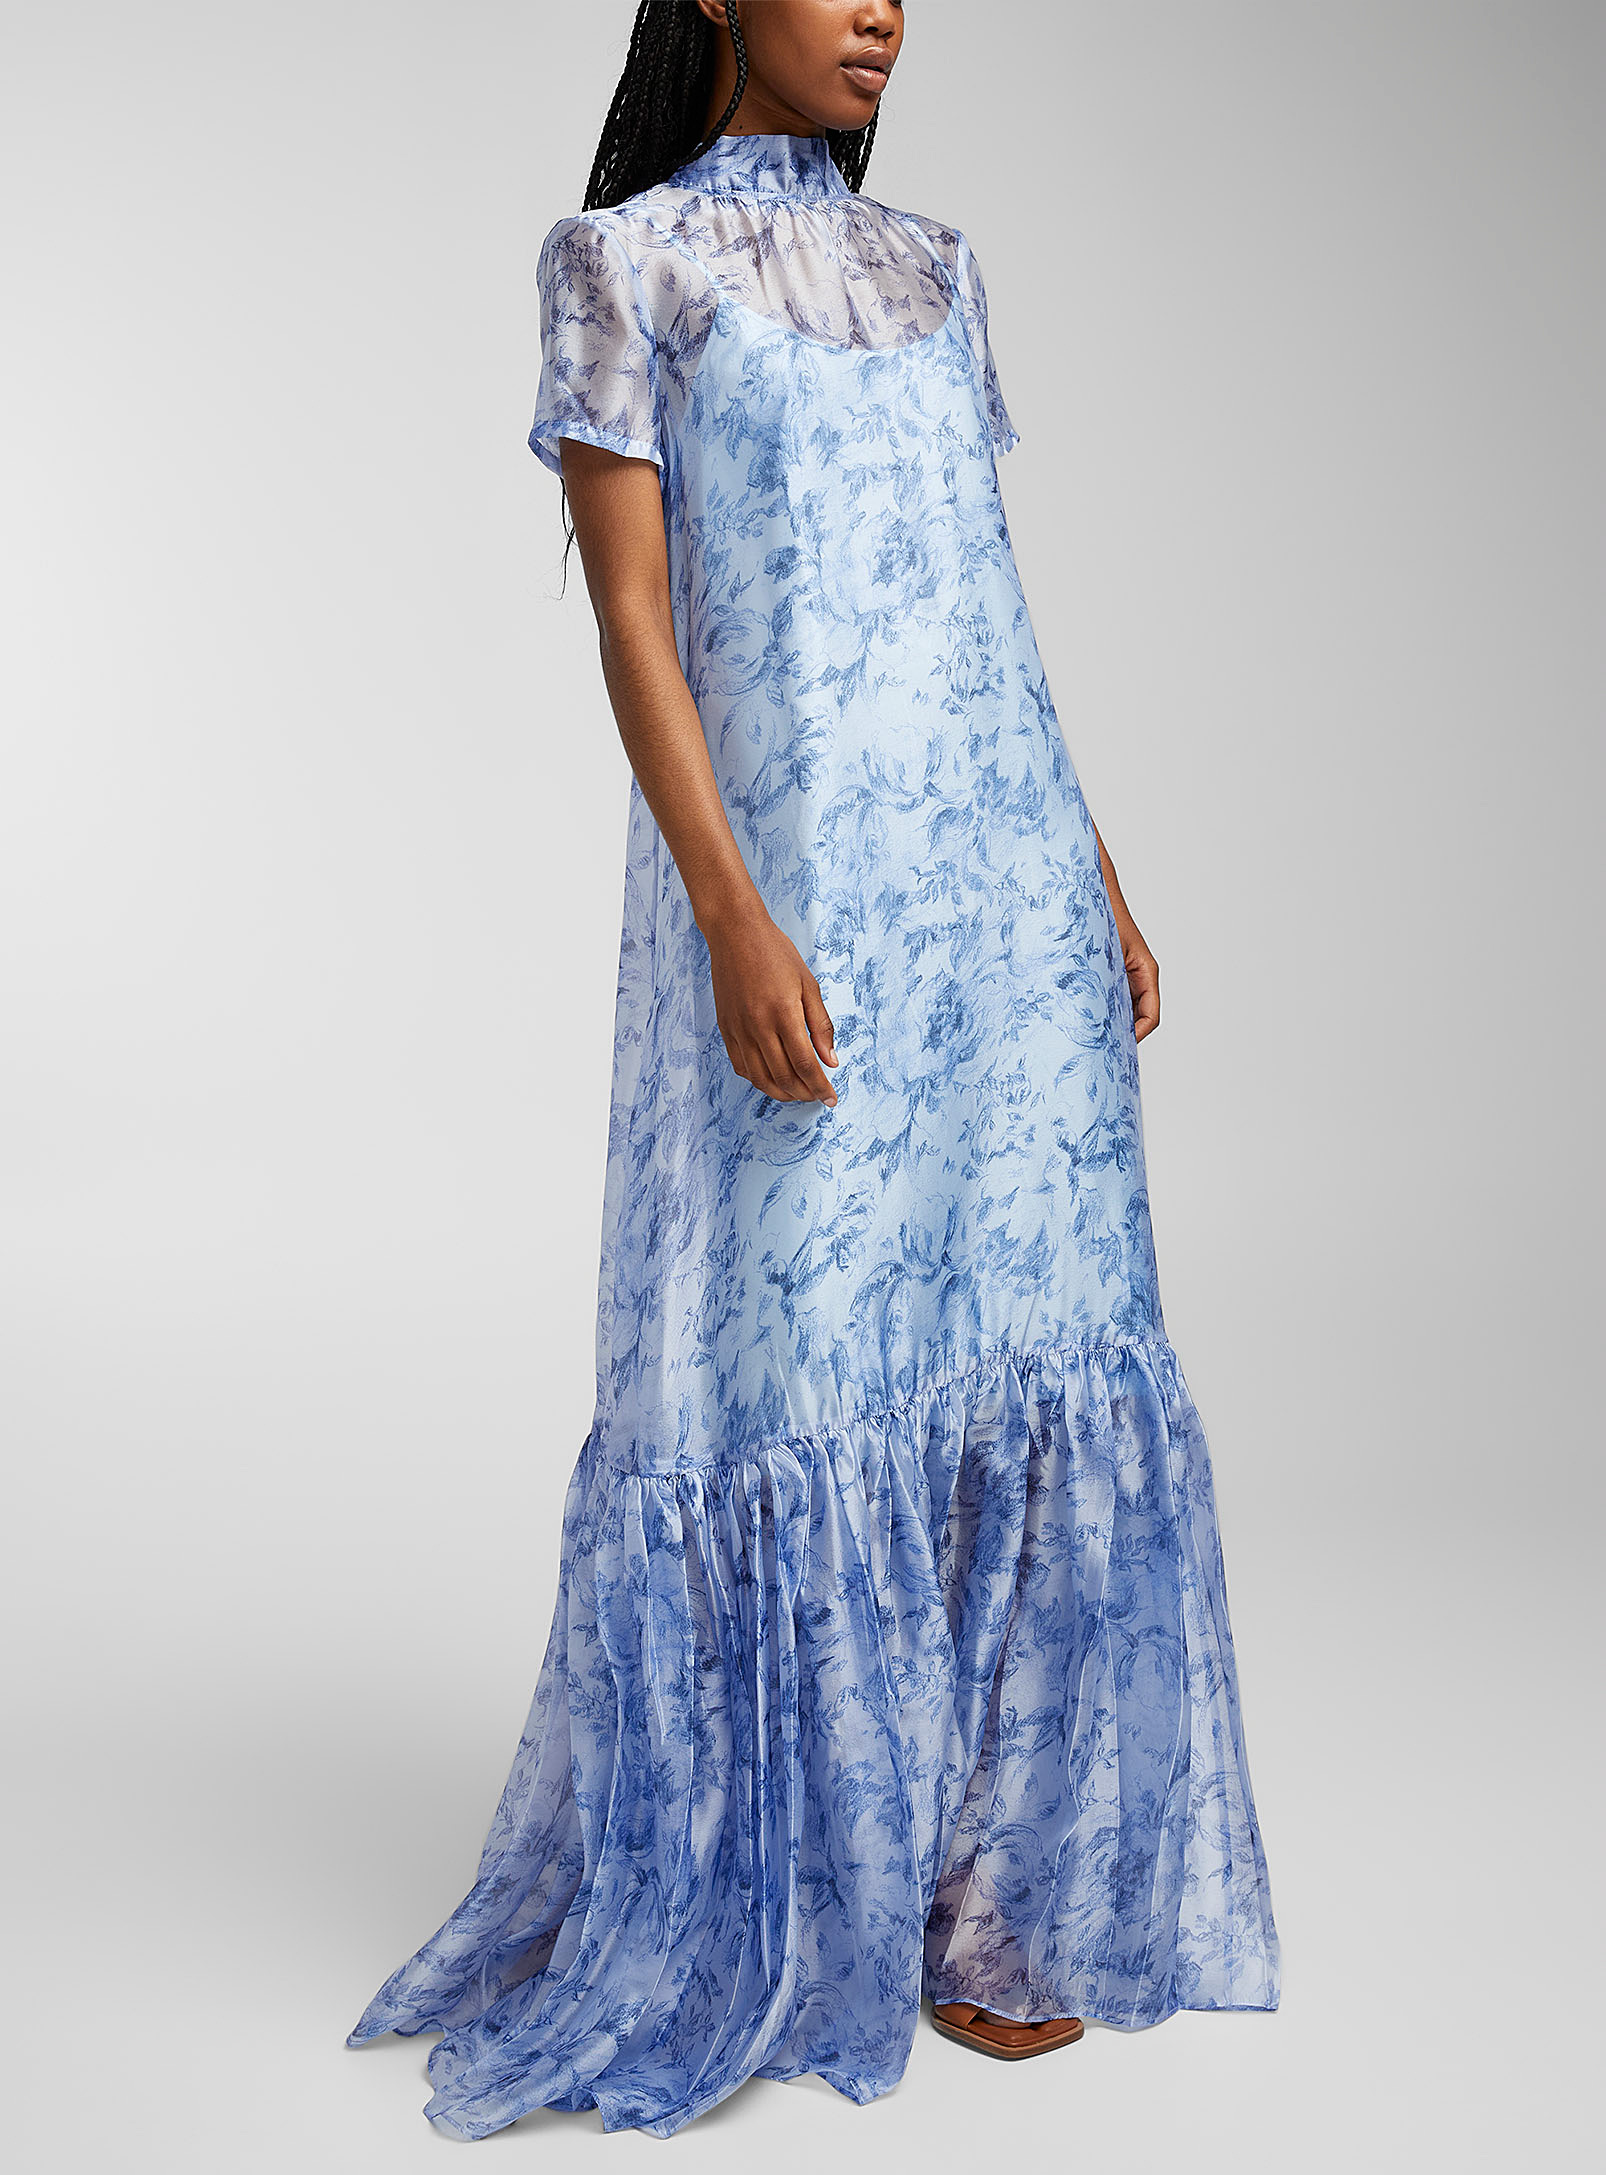 STAUD - Women's Calluna floral layered dress